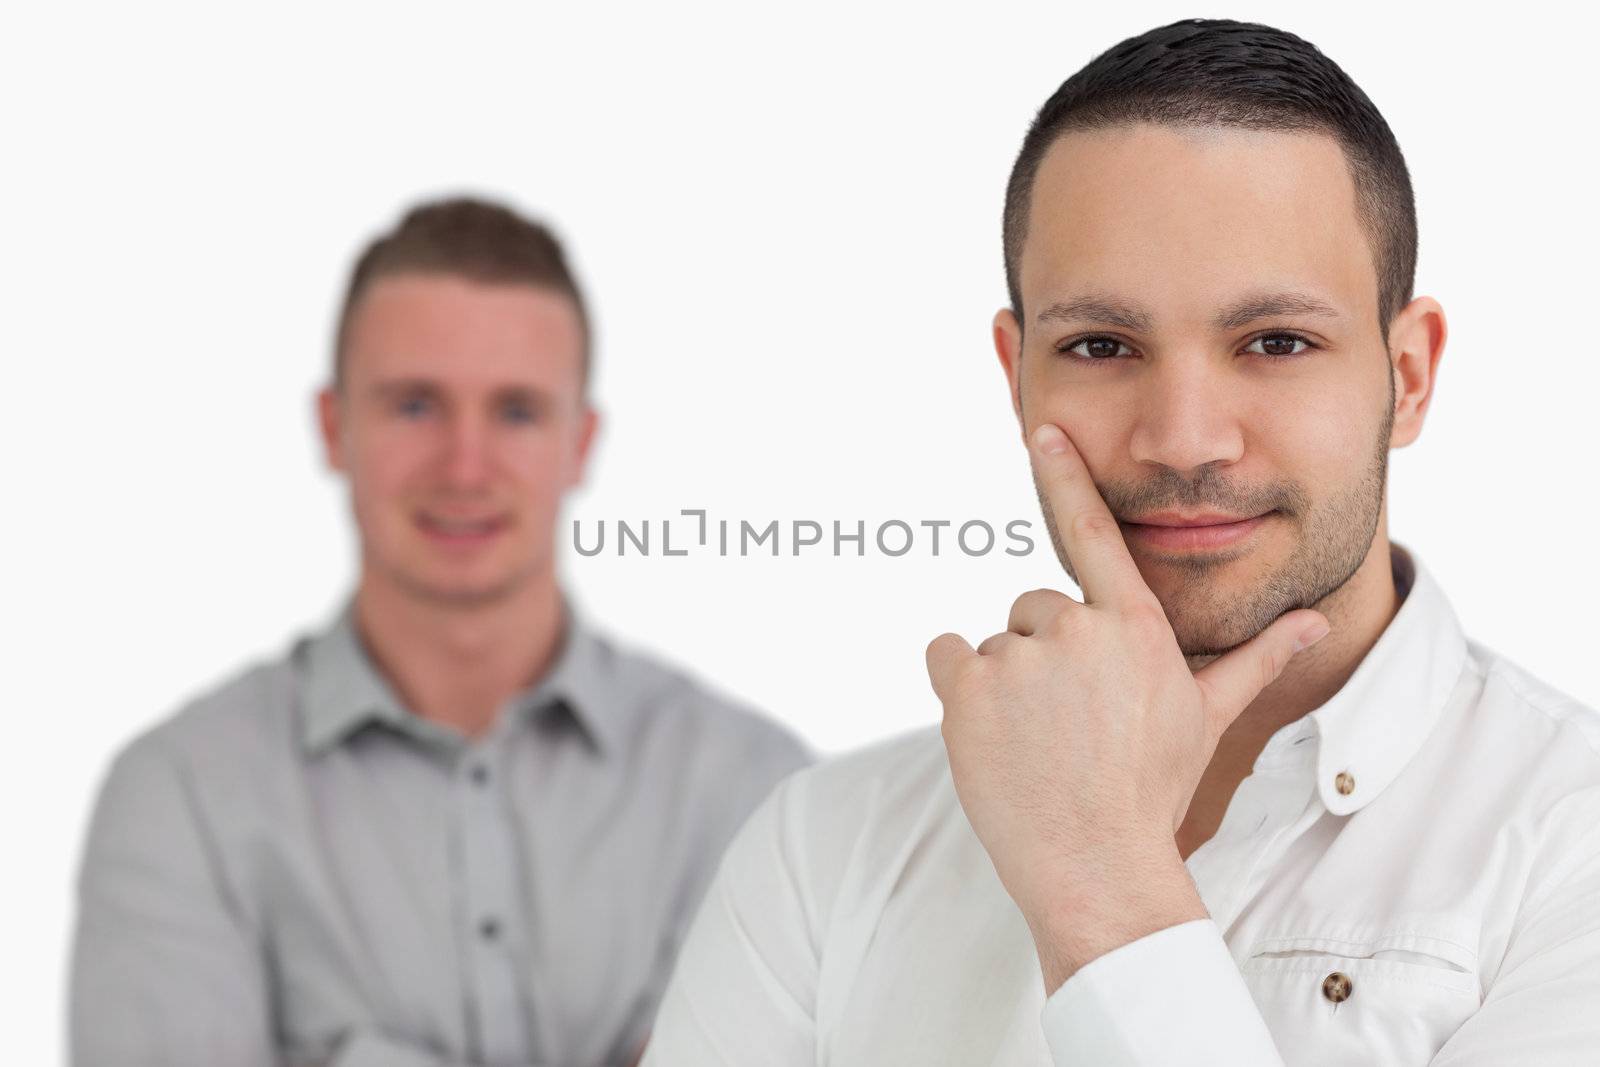 Smiling men together against a white background